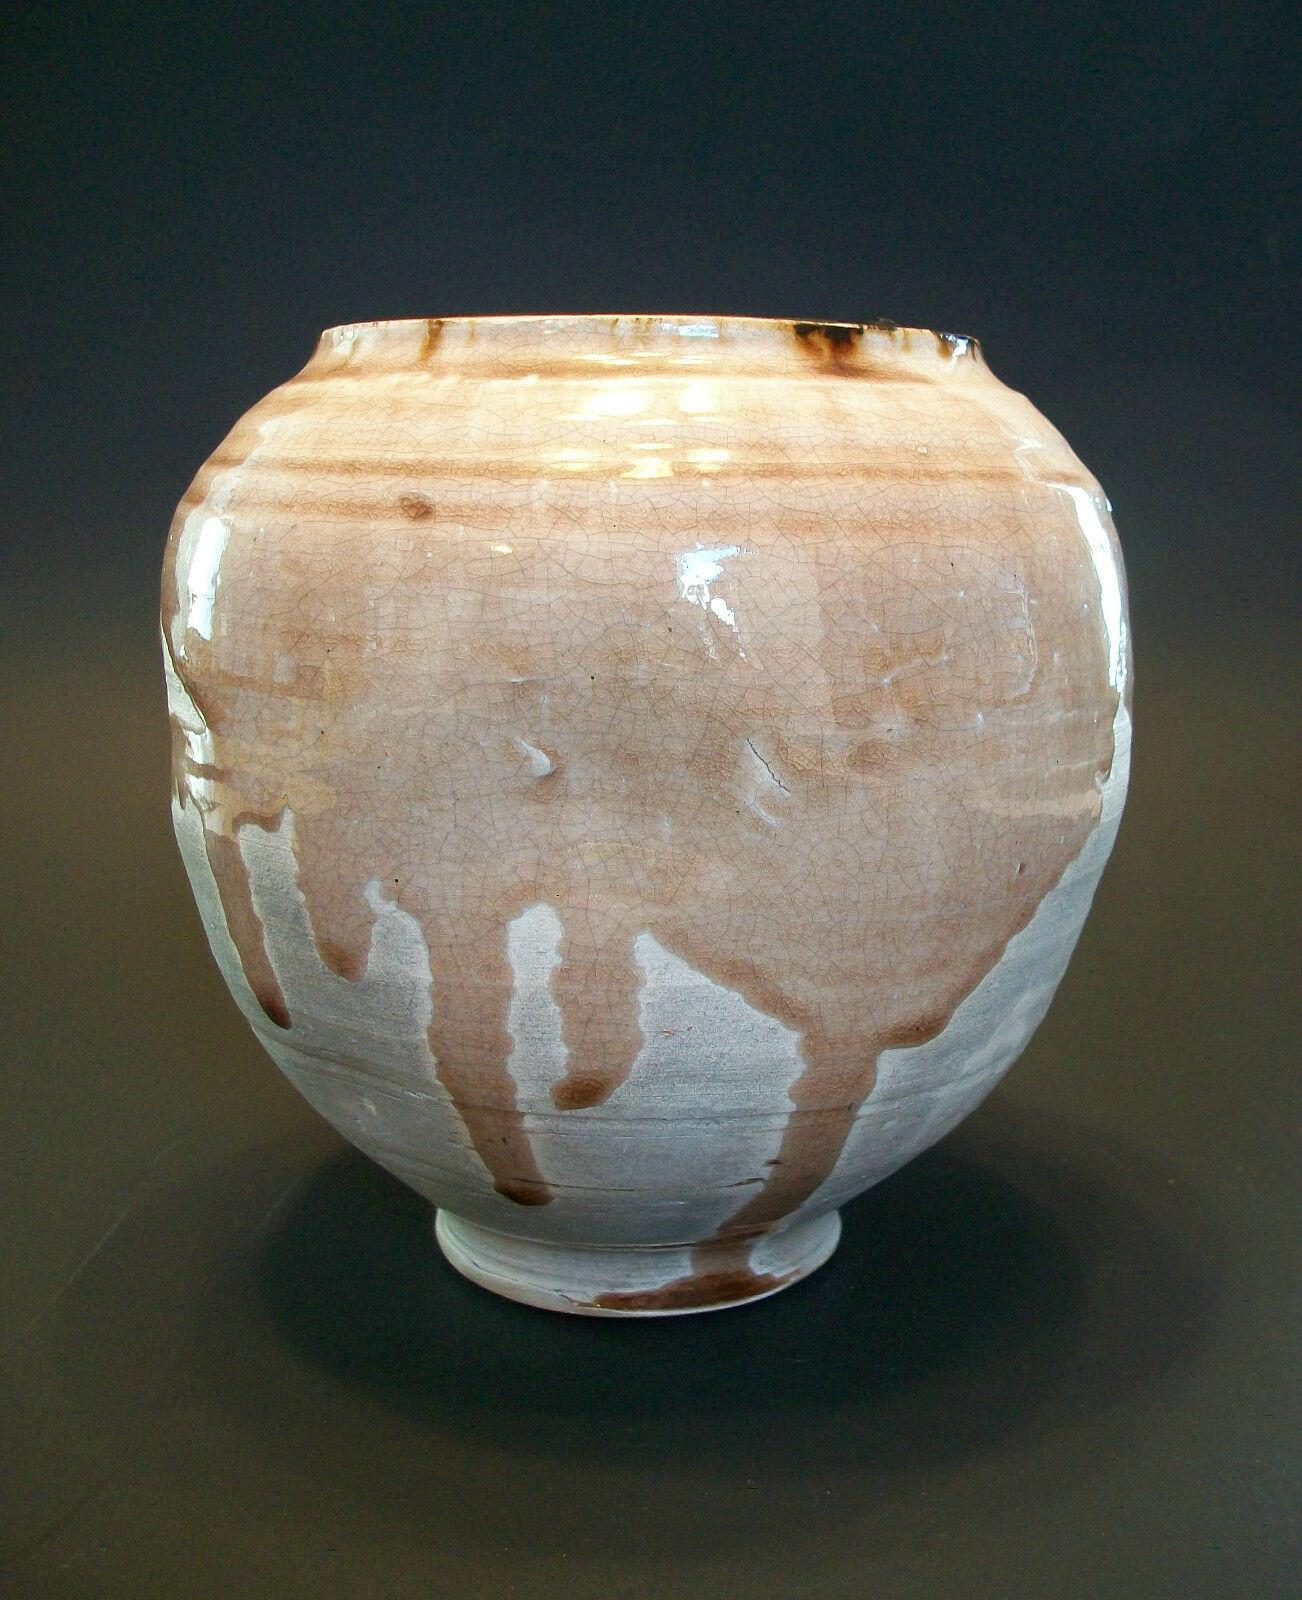 Japanese Vintage Glazed Ceramic Vase - Dimpled Sides - Unsigned - Late 20th Century For Sale